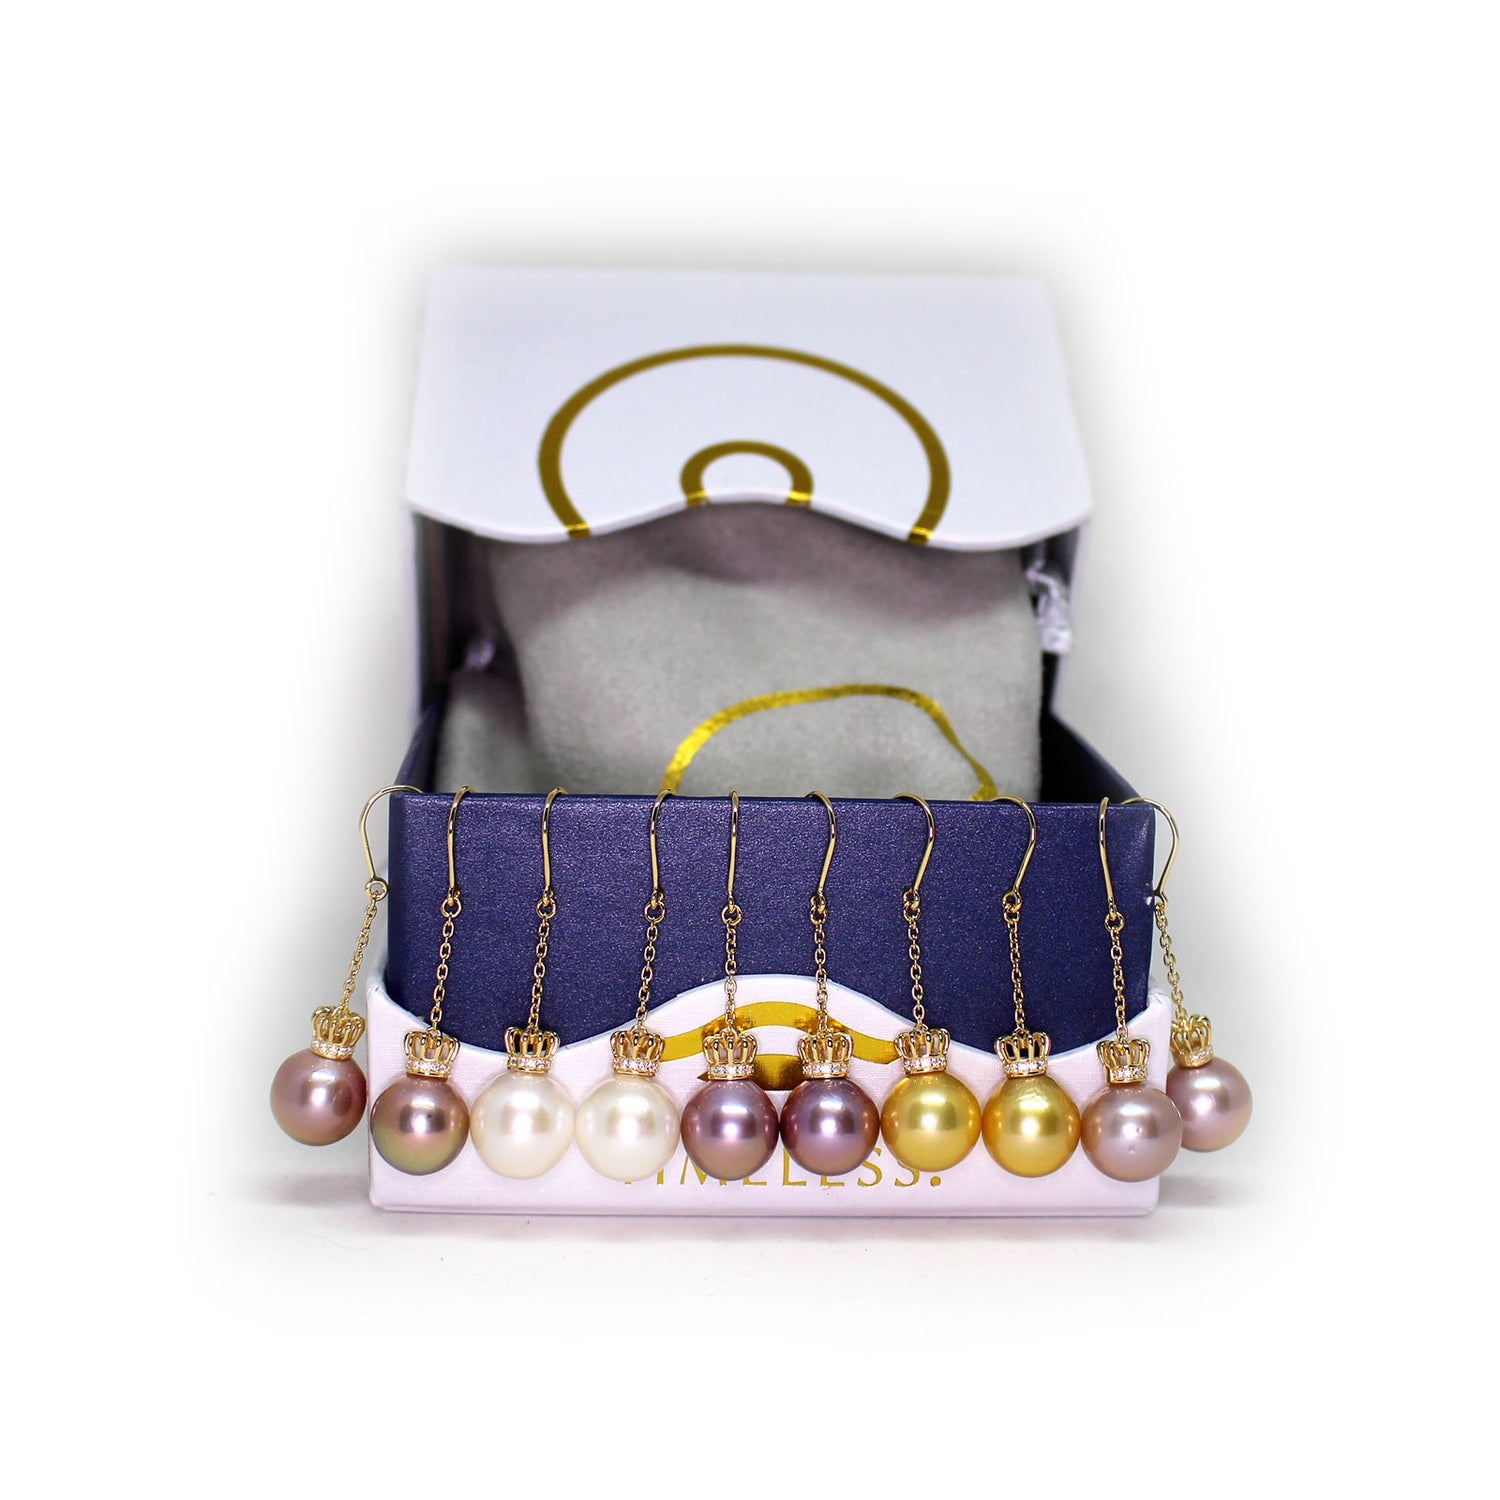 Golden Crown Edison Pearl Earrings - Timeless Pearl